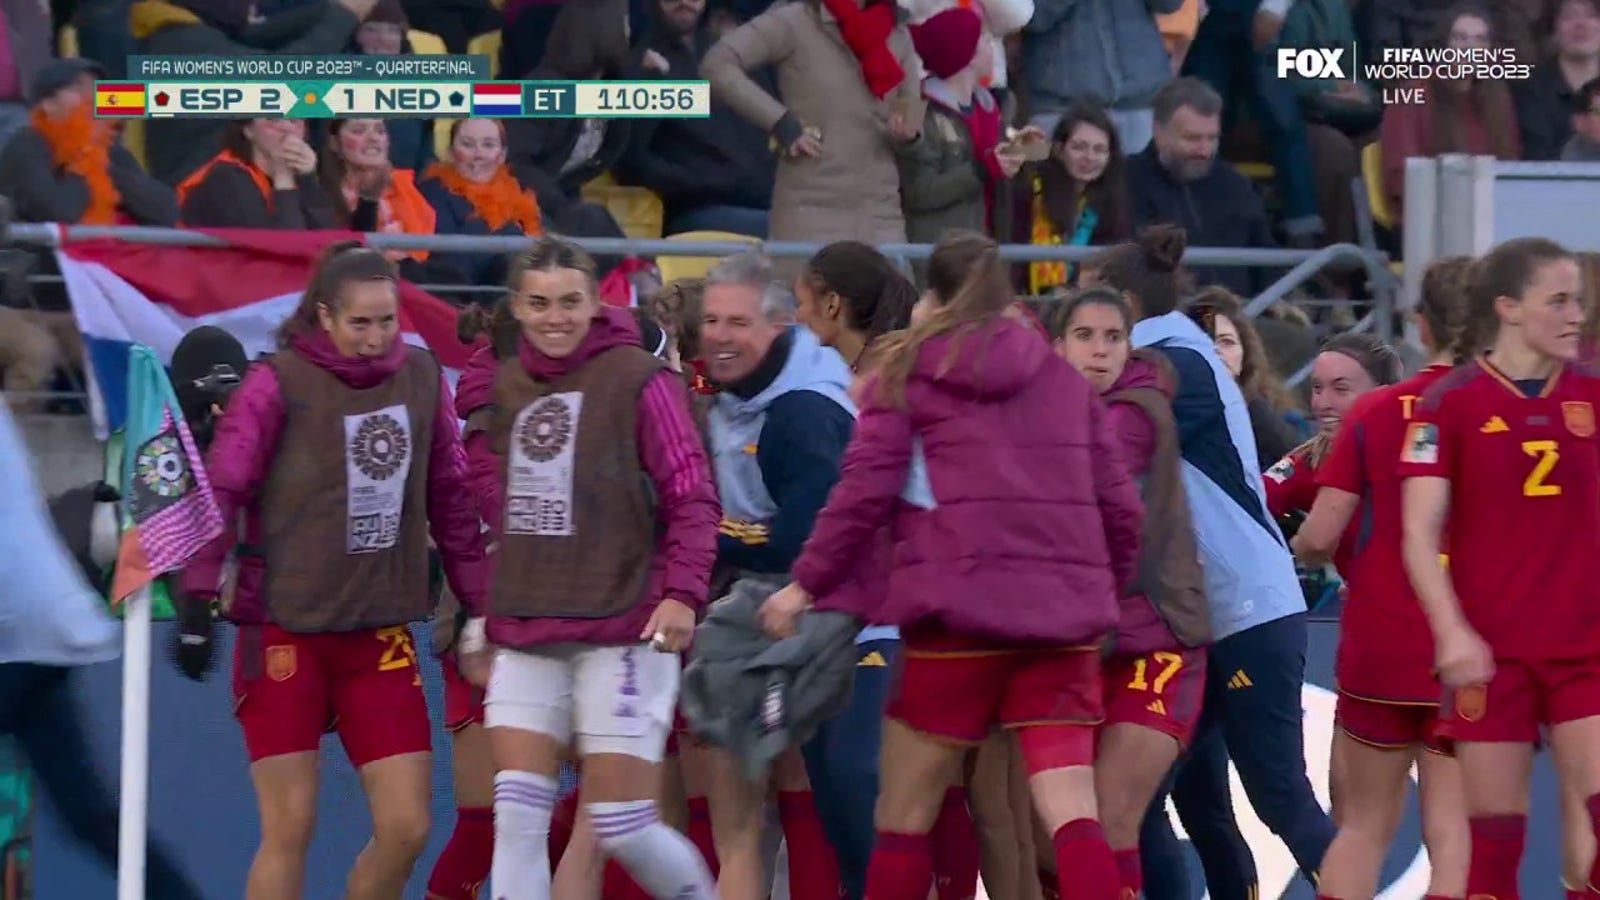 Spain's Salma Paralluelo scores goal vs. Netherlands in 111'